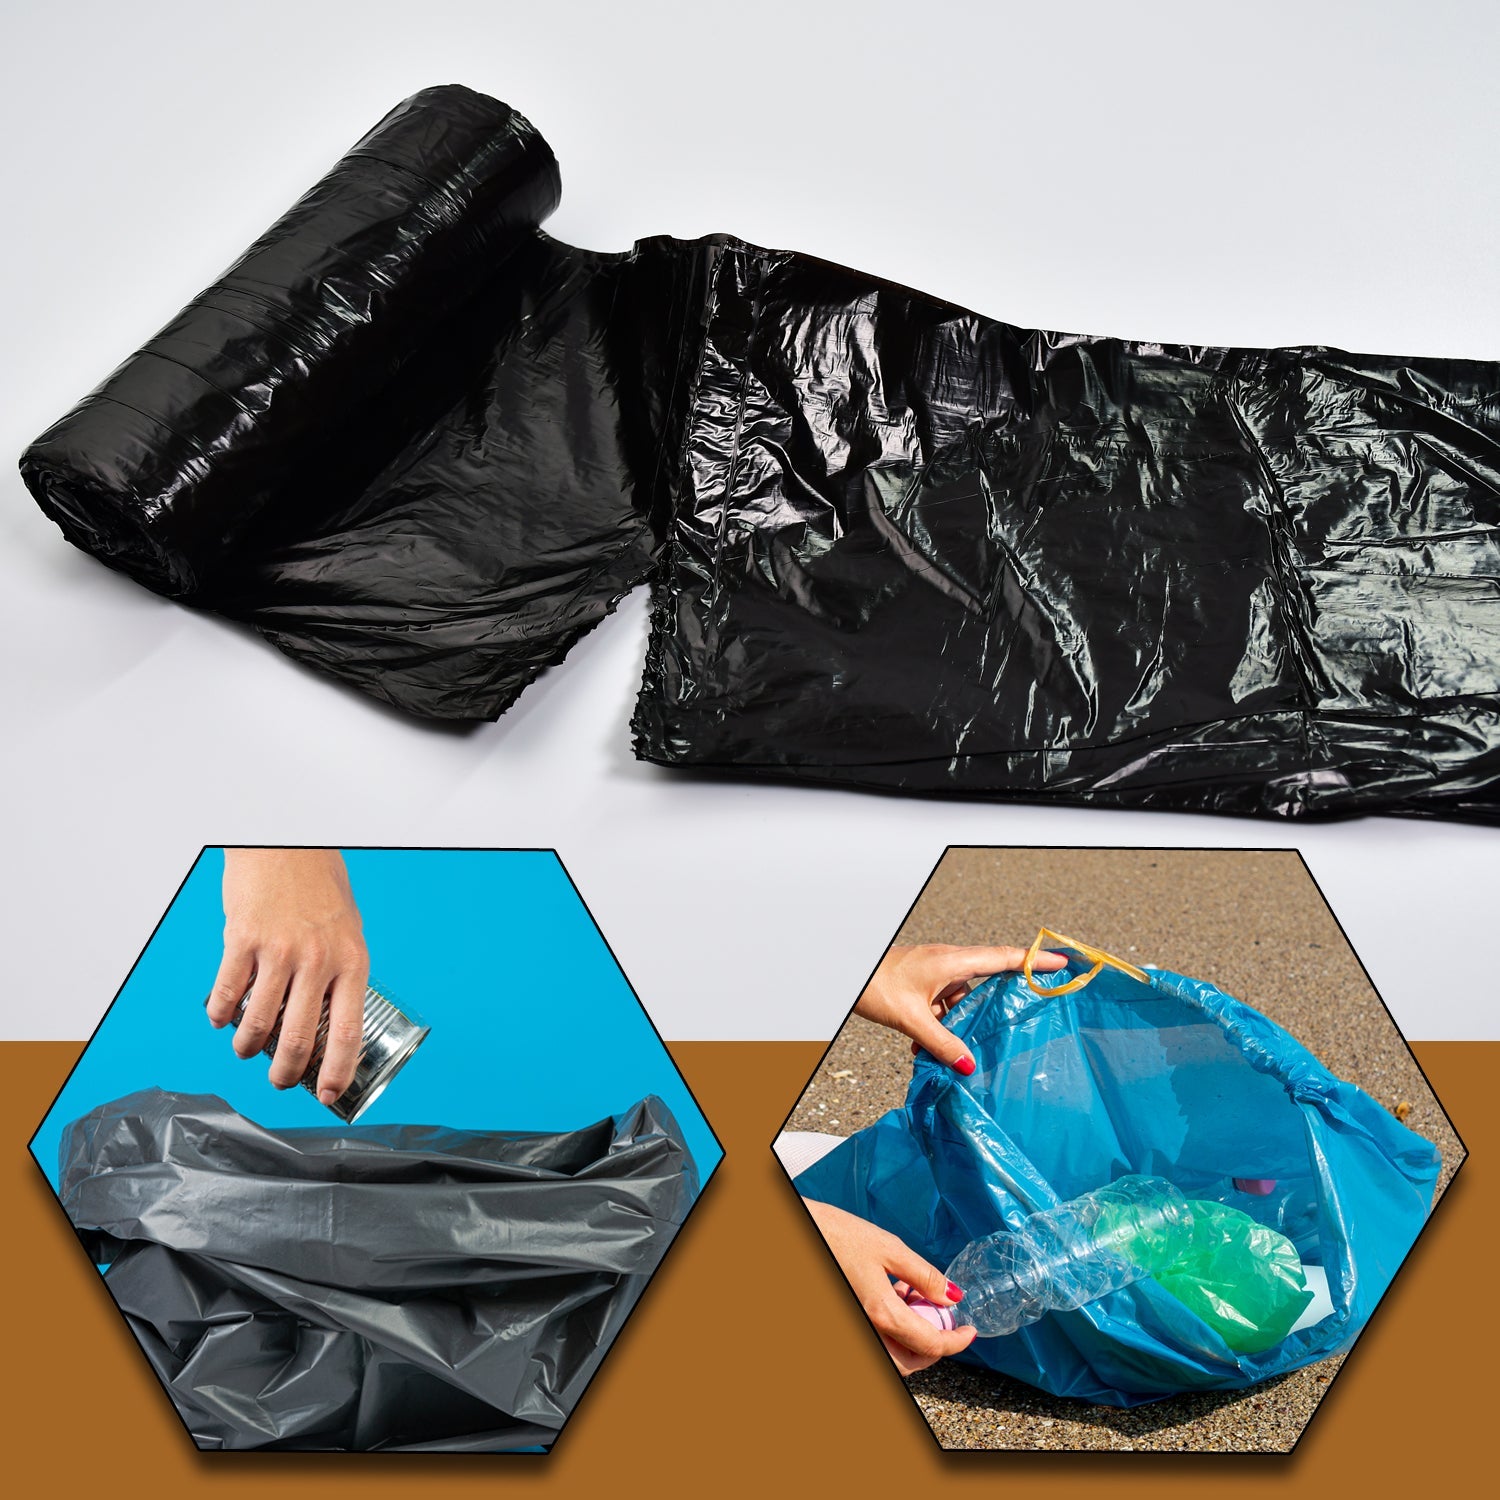 1 Roll Garbage Bags / Dustbin Bags / Trash Bags - 45X55Cm